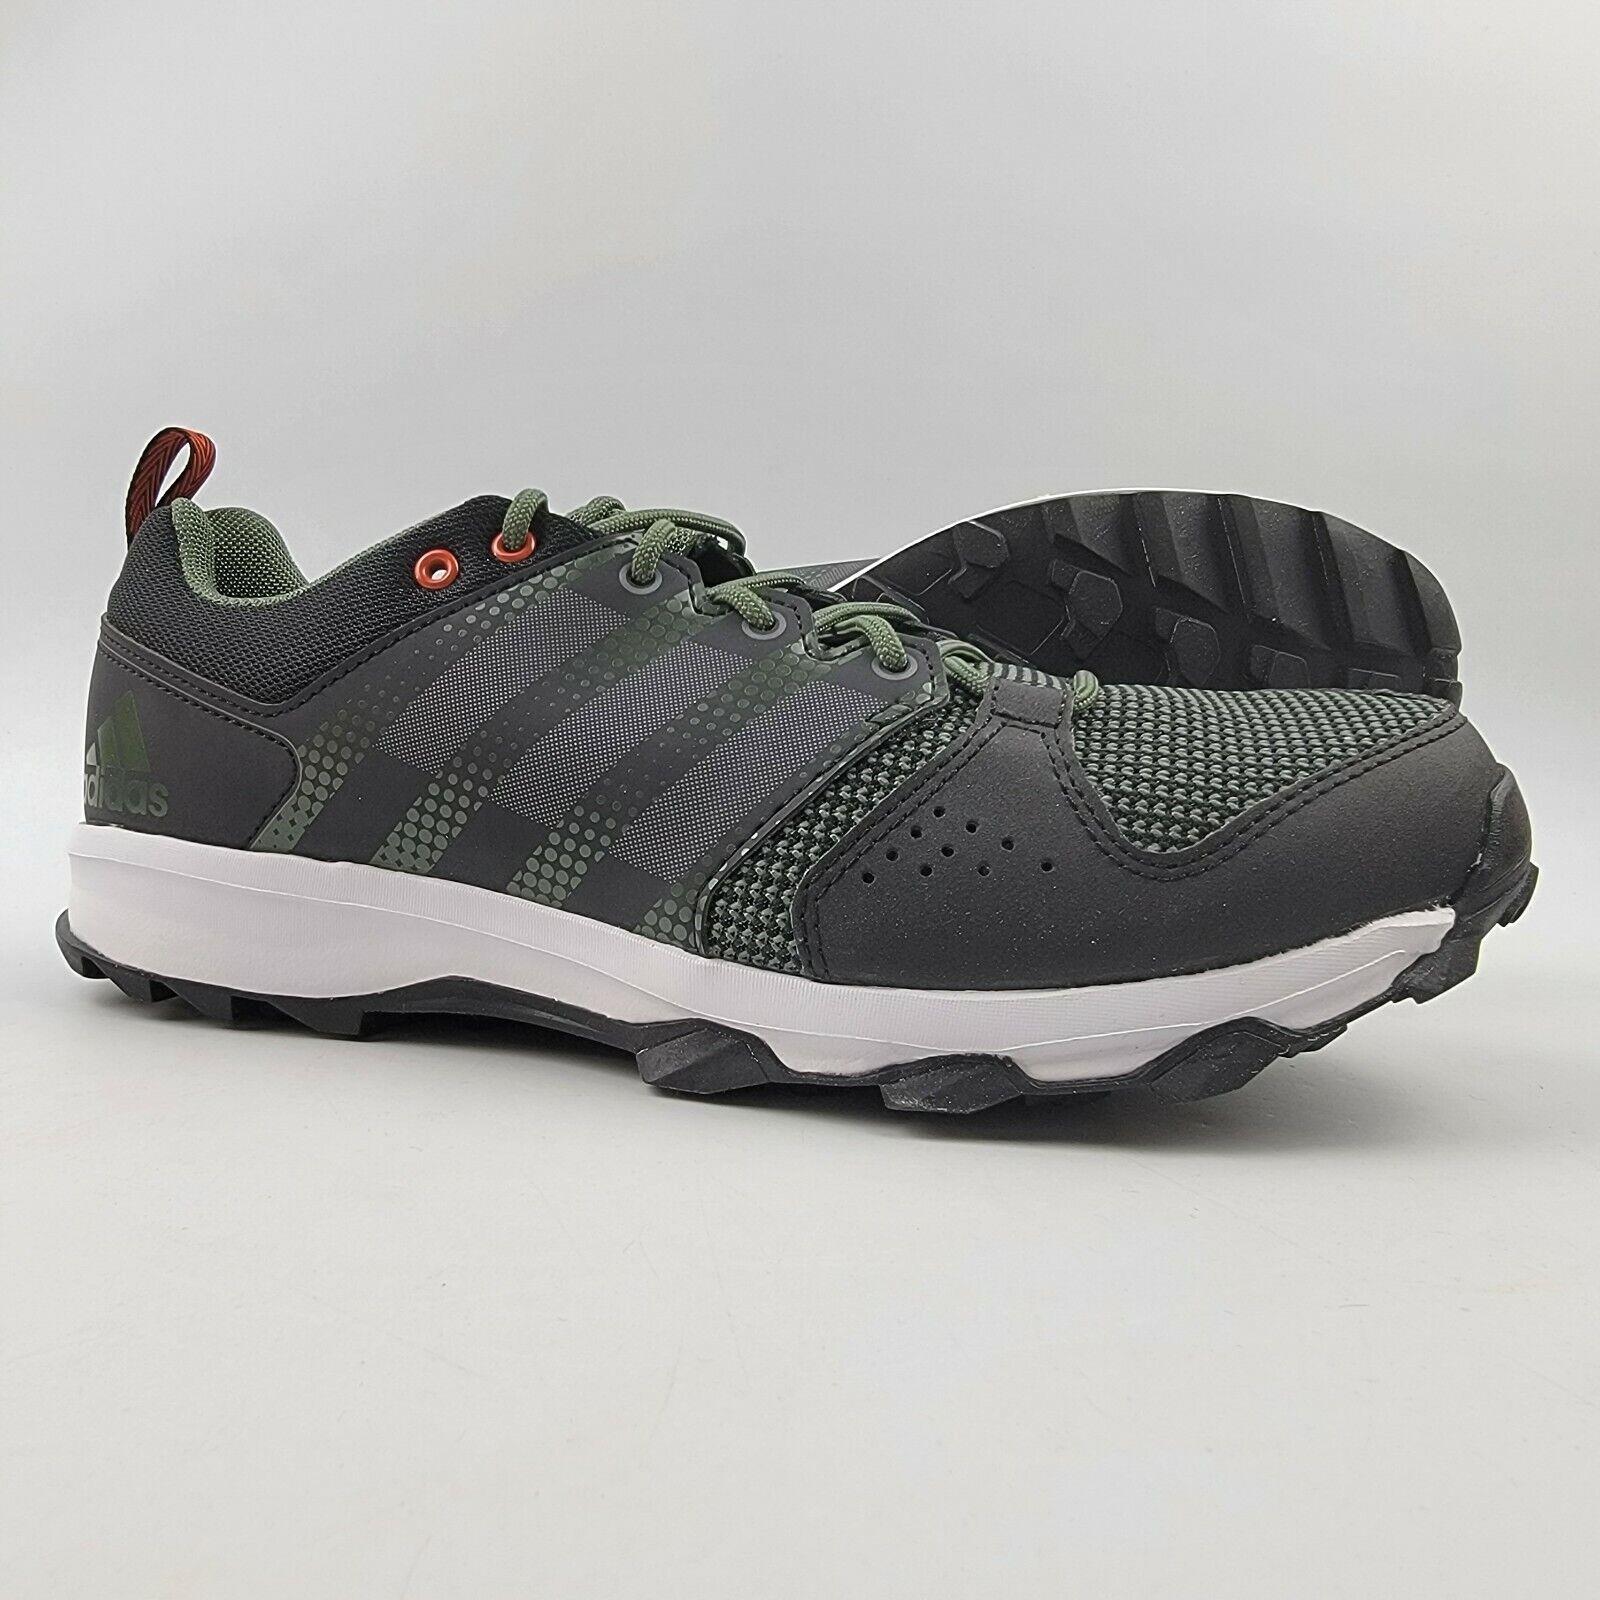 Adidas Galaxy Trail Hiking Shoes Grey Green Black AQ5919 Mens Size 9.5